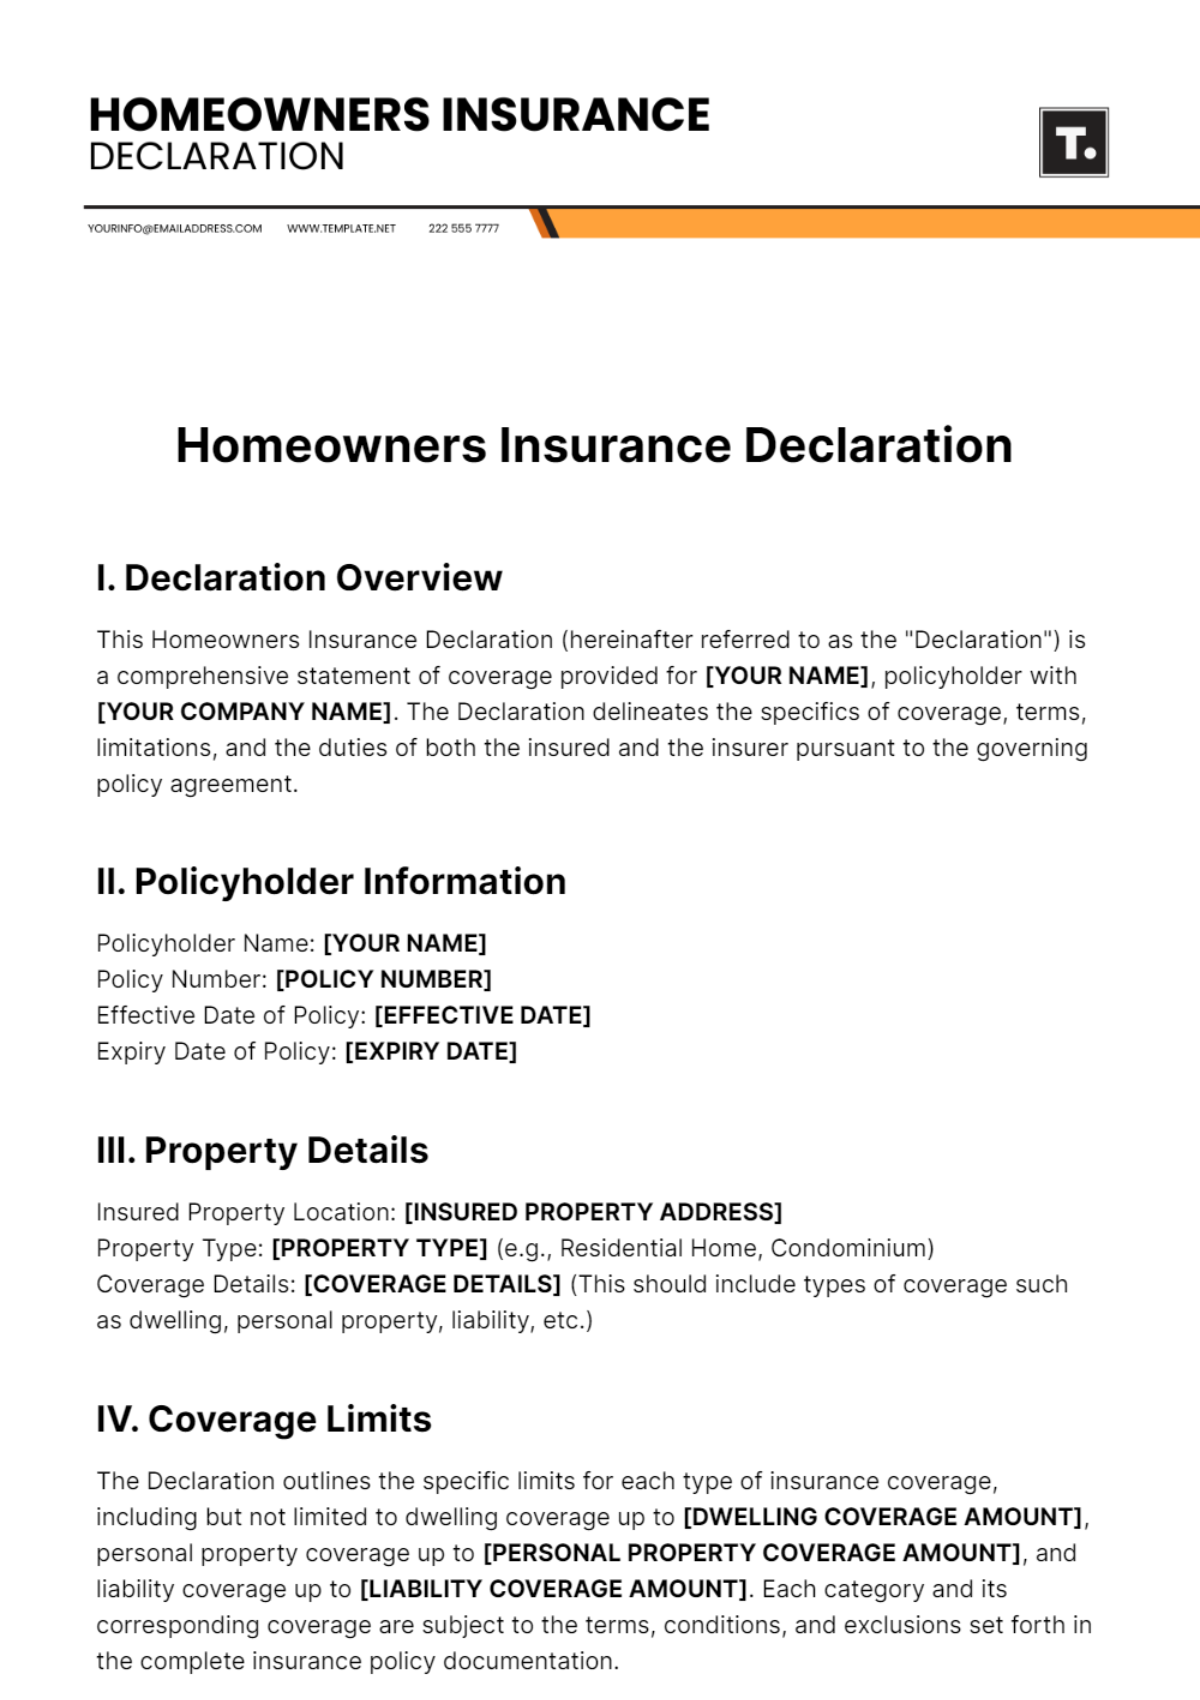 Homeowners Insurance Declaration Template